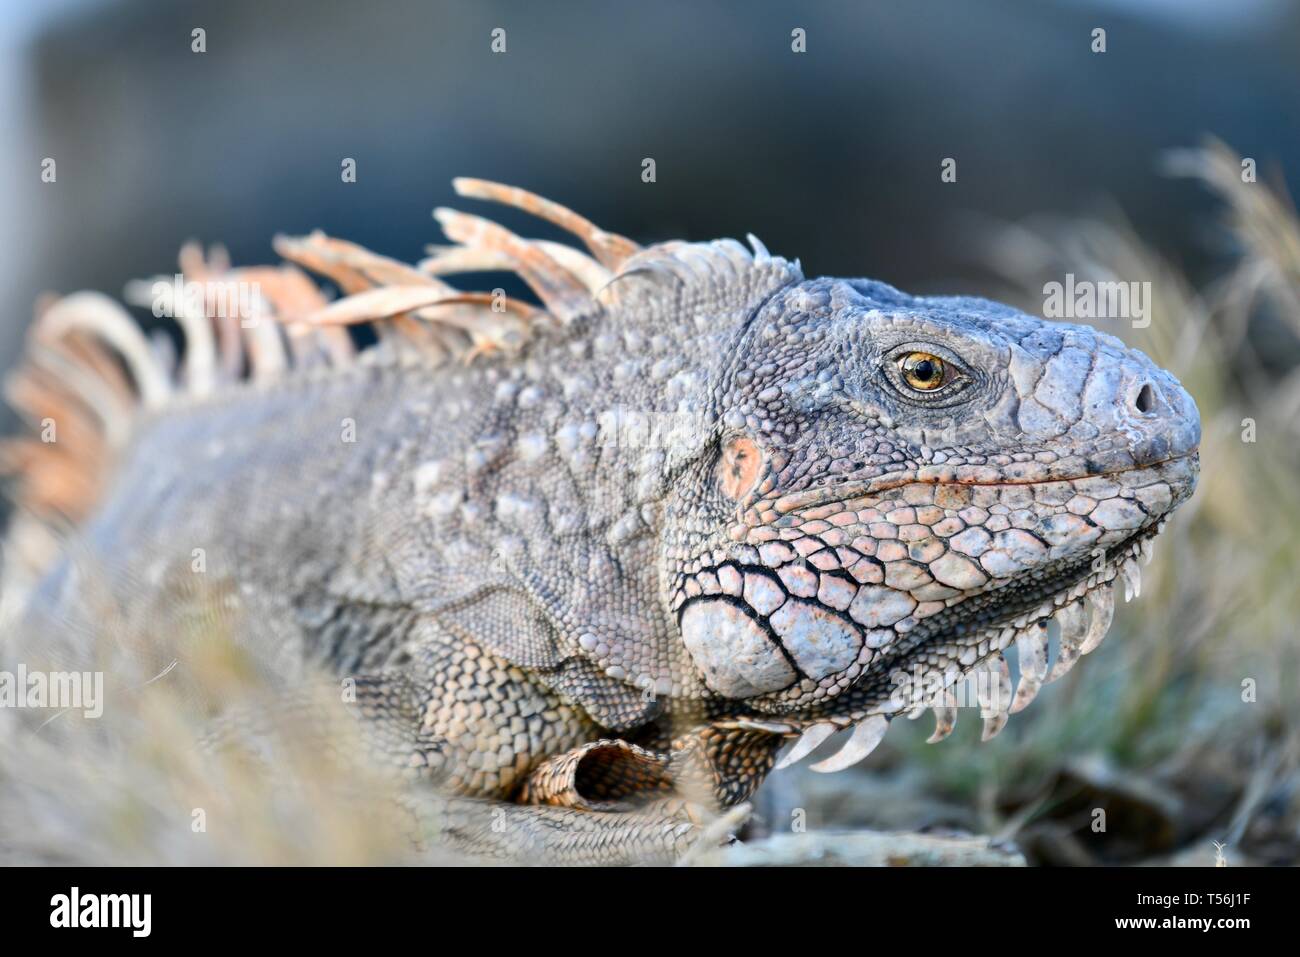 Iguana found in St. Croix, United States Virgin Islands Stock Photo